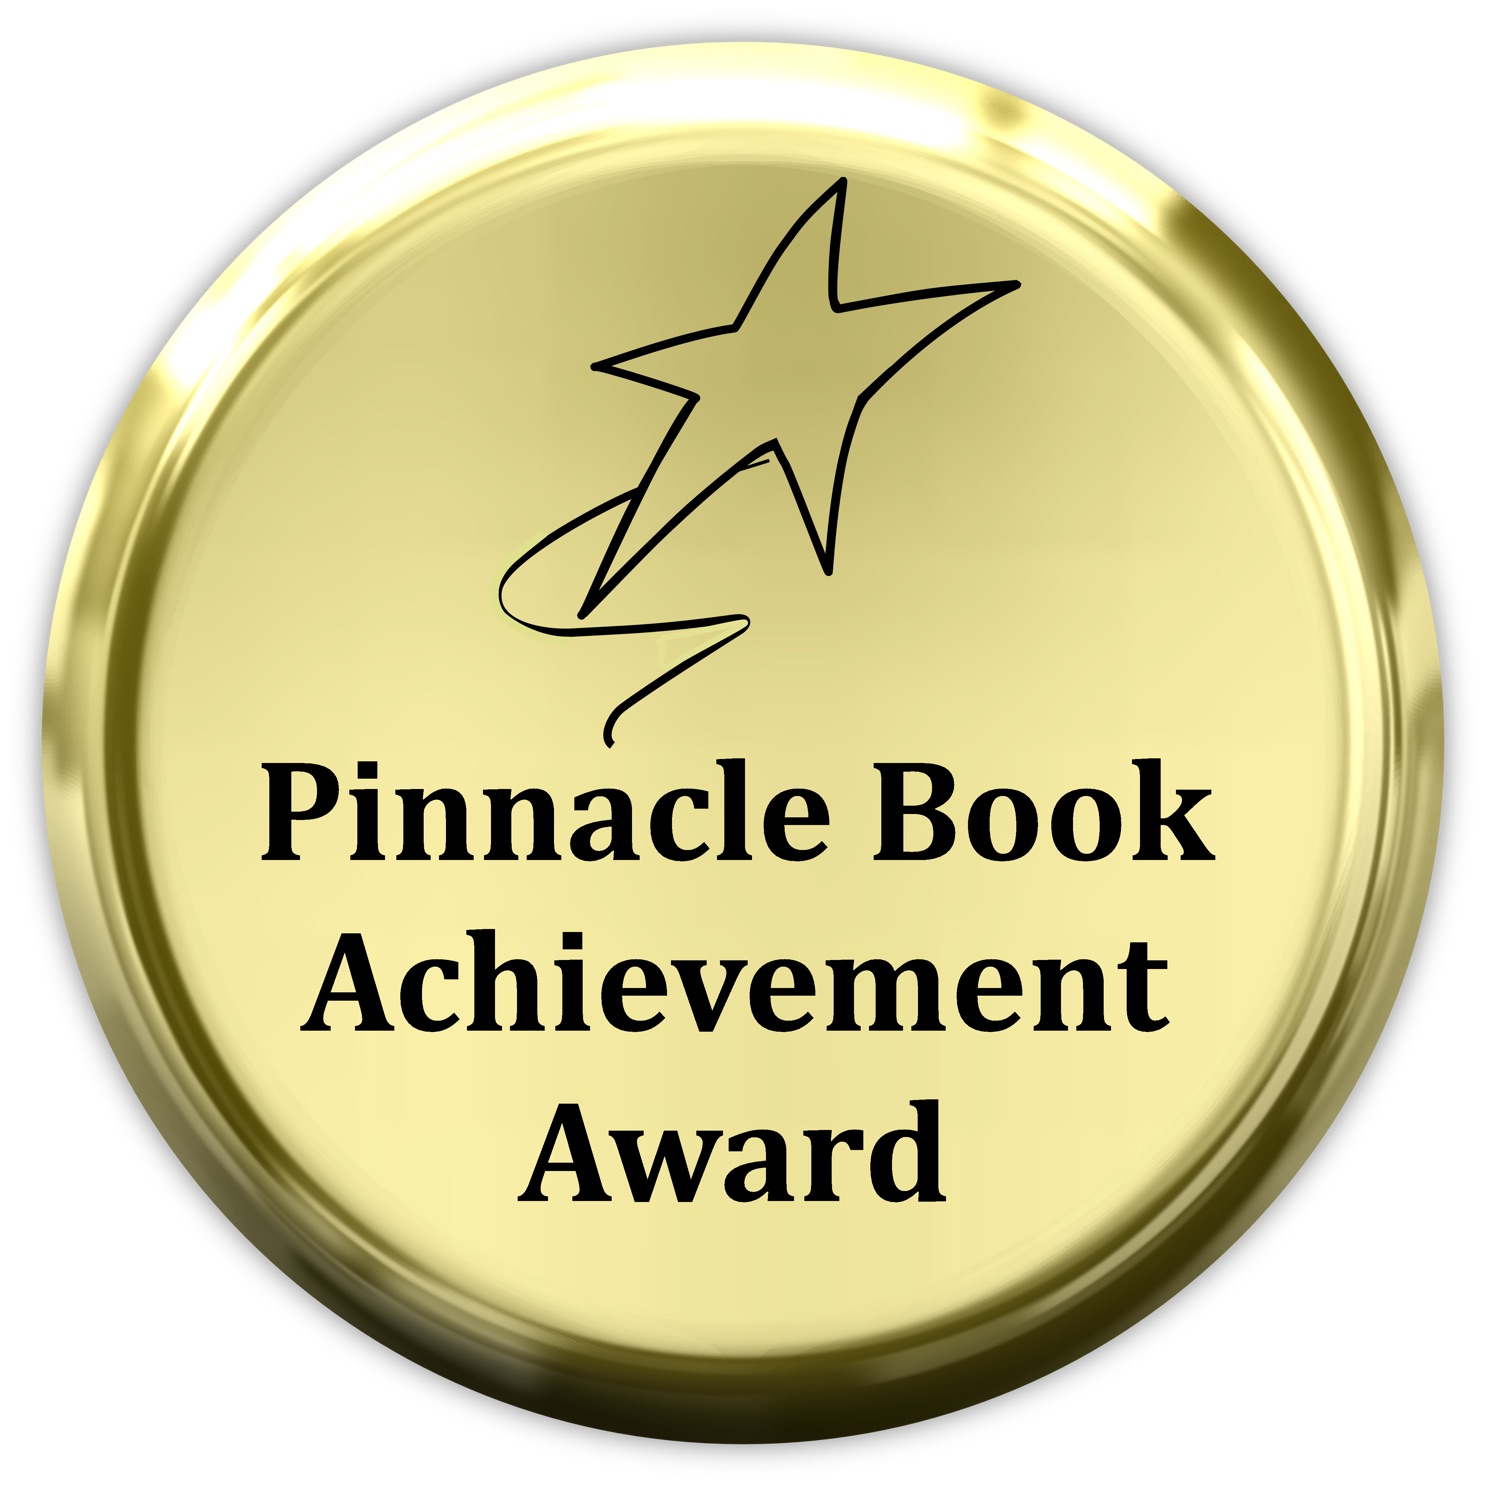 PINNACLE BOOK ACHIEVEMENT AWARD WINNER!